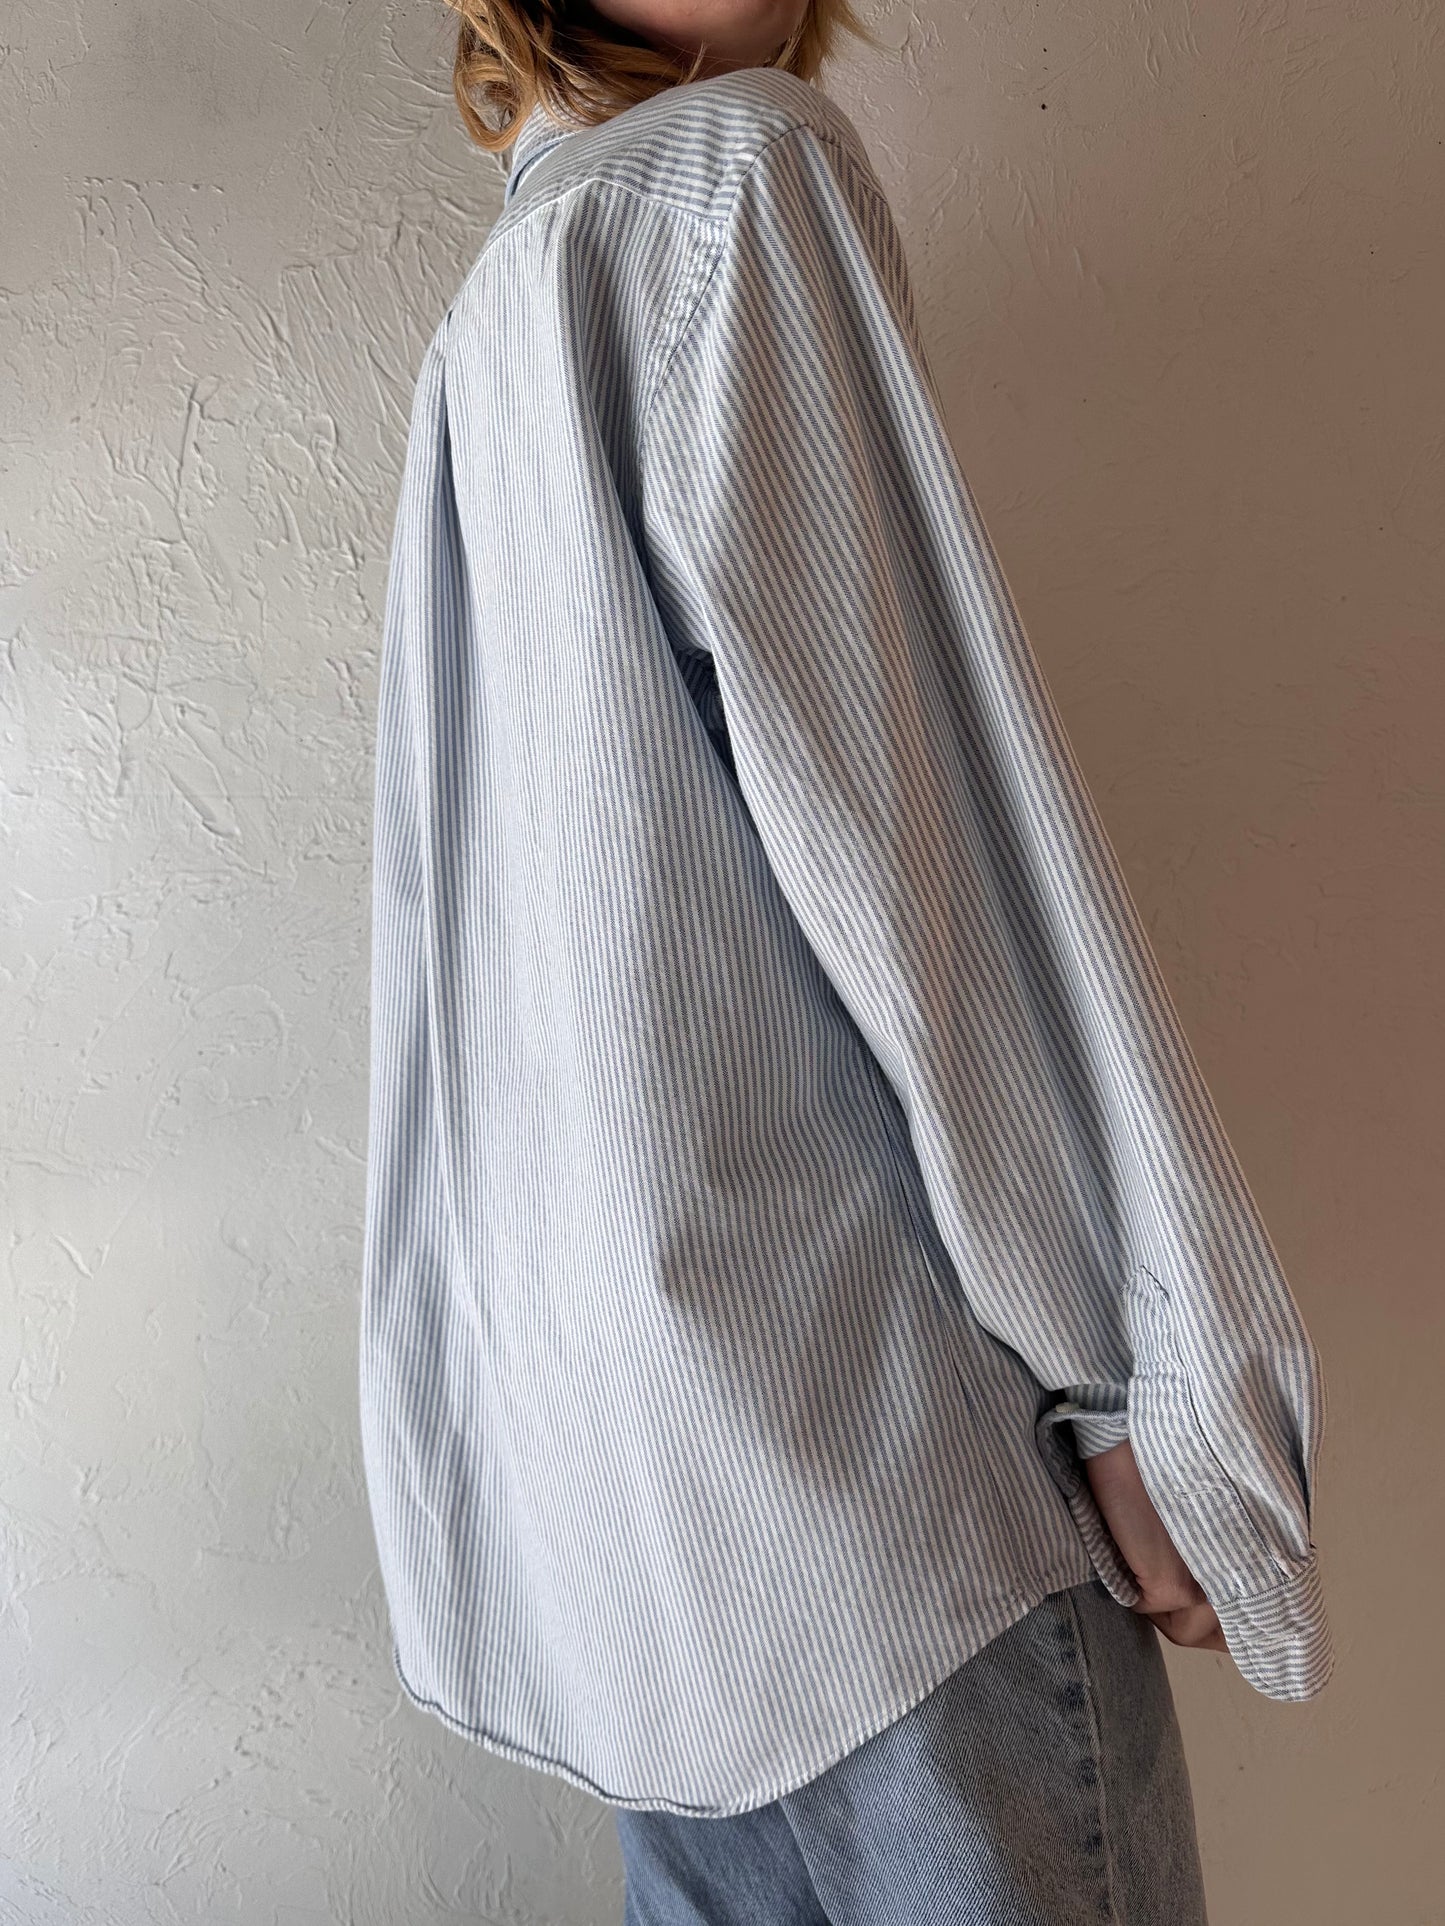 Y2k 'Ralph Lauren' Striped Button Up Shirt / Large